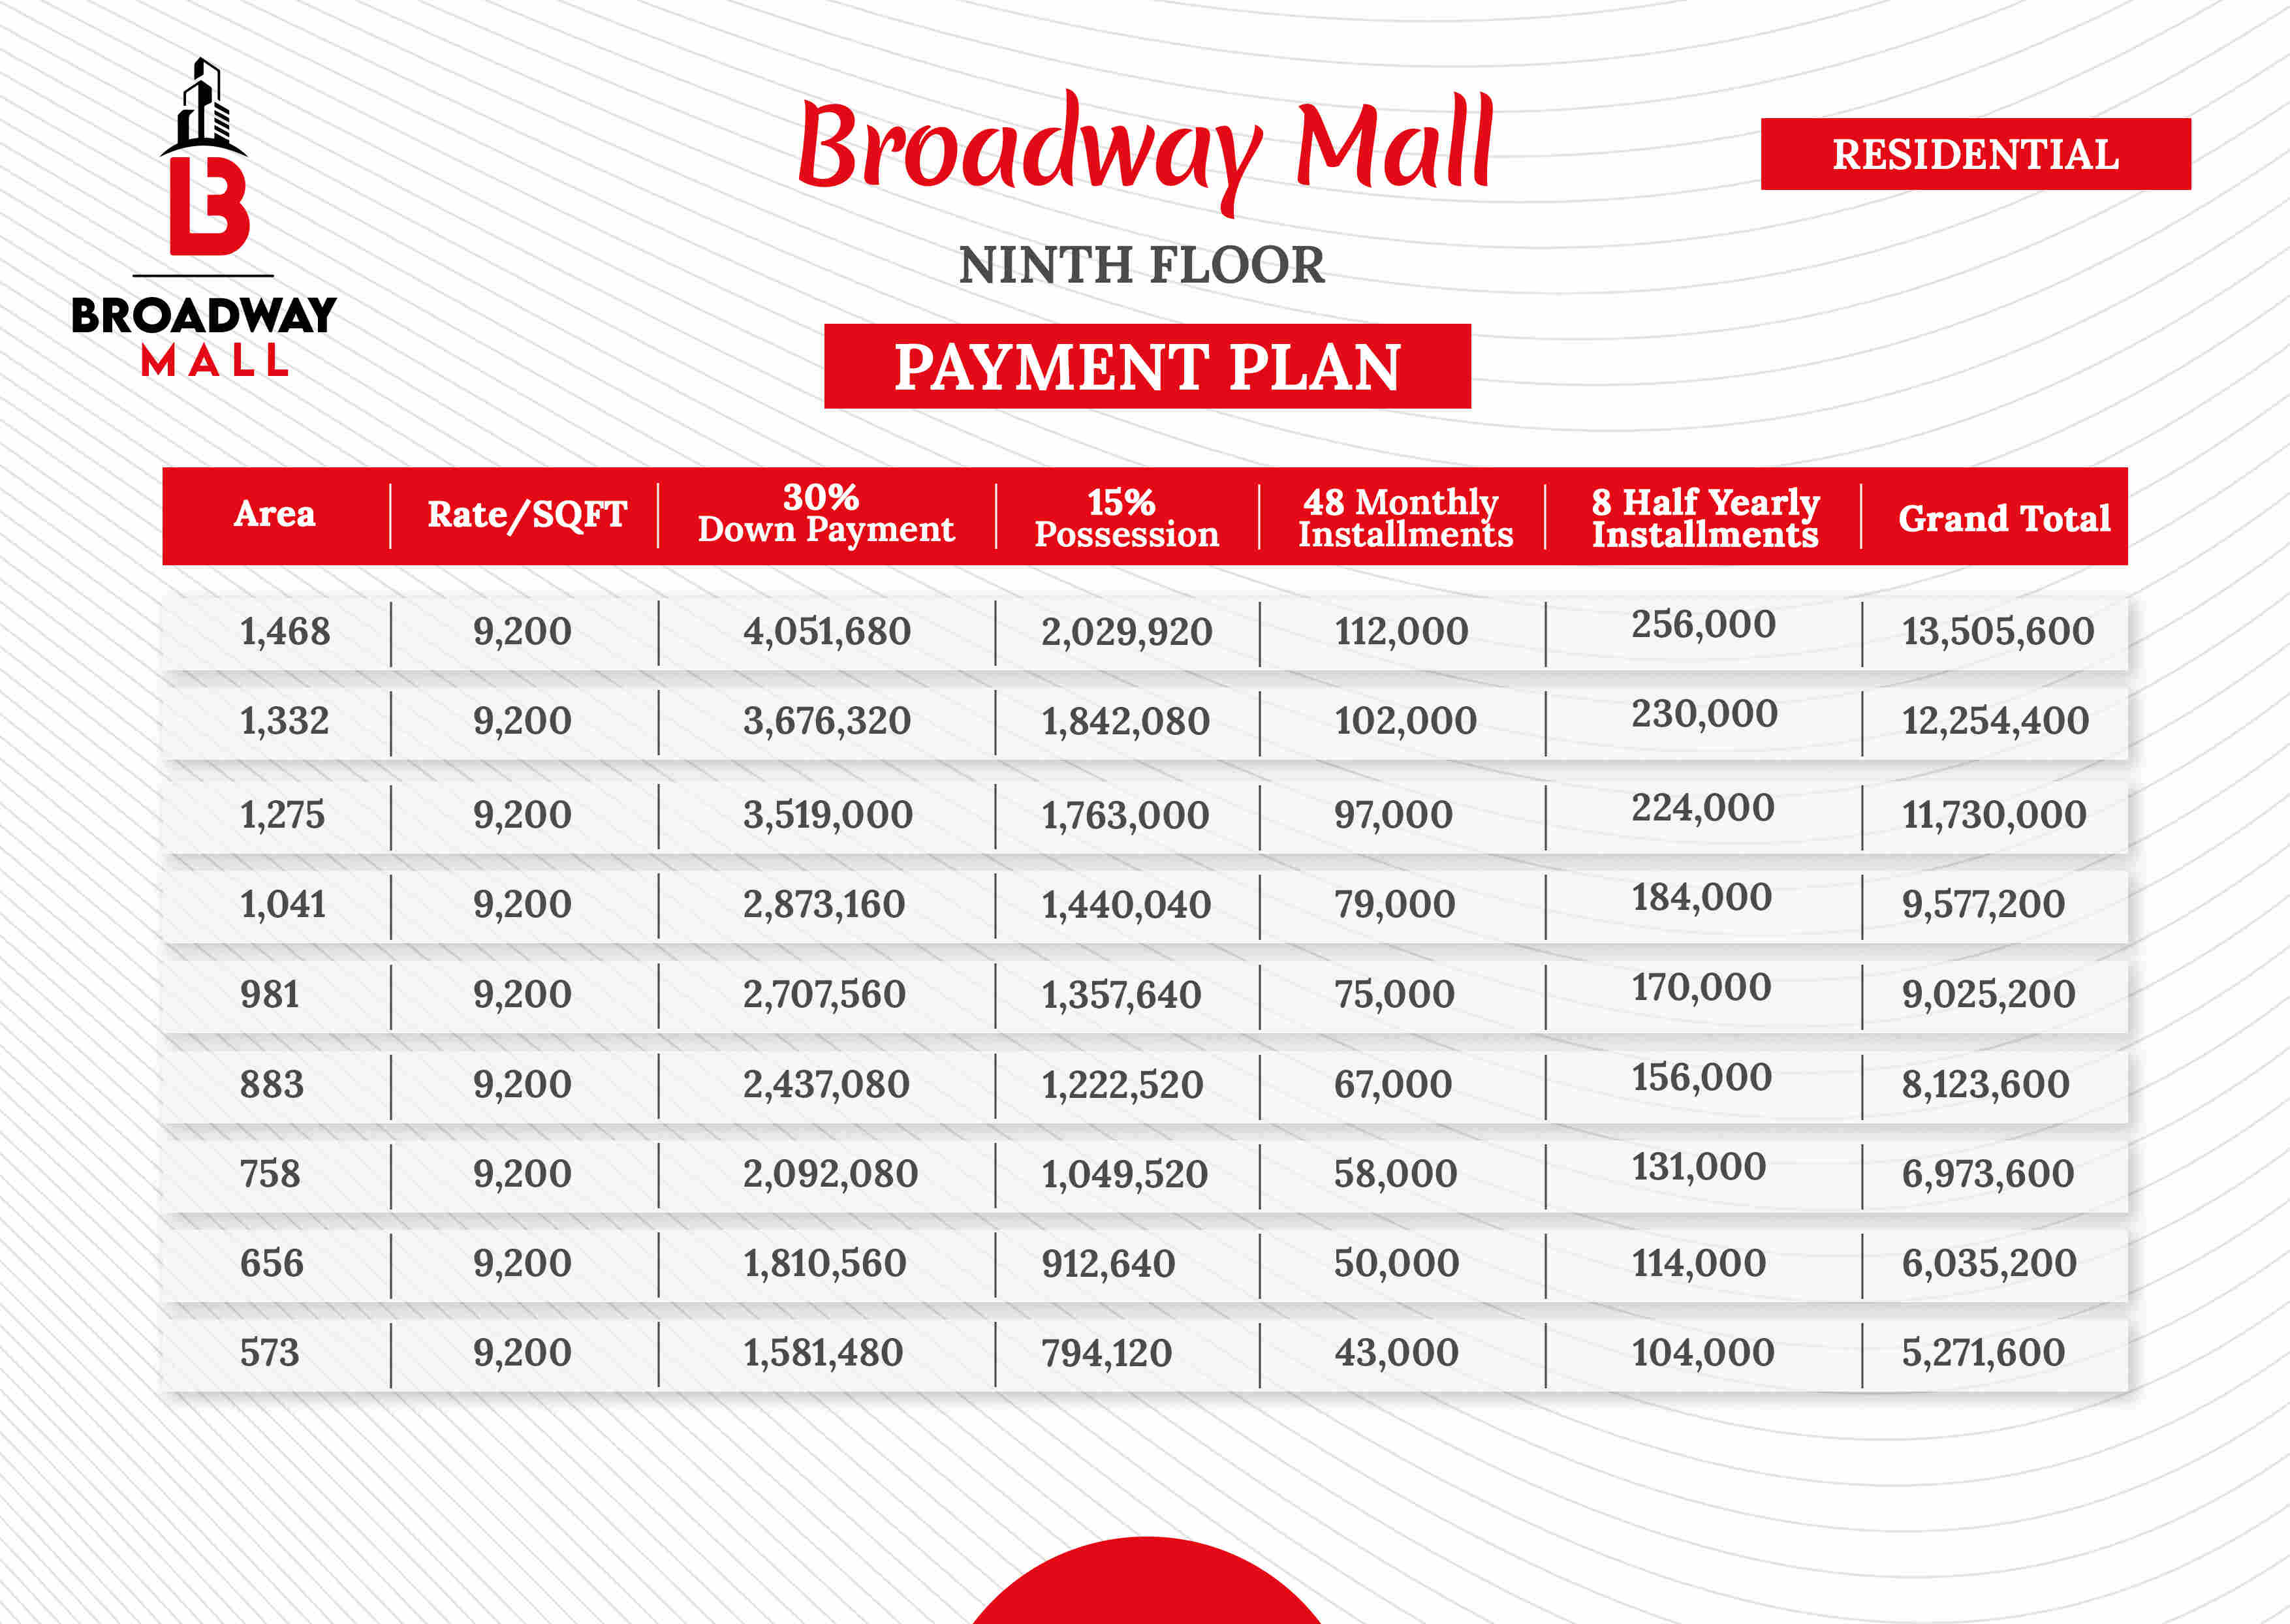 broadway mall in peshawar ninth floor payment plan